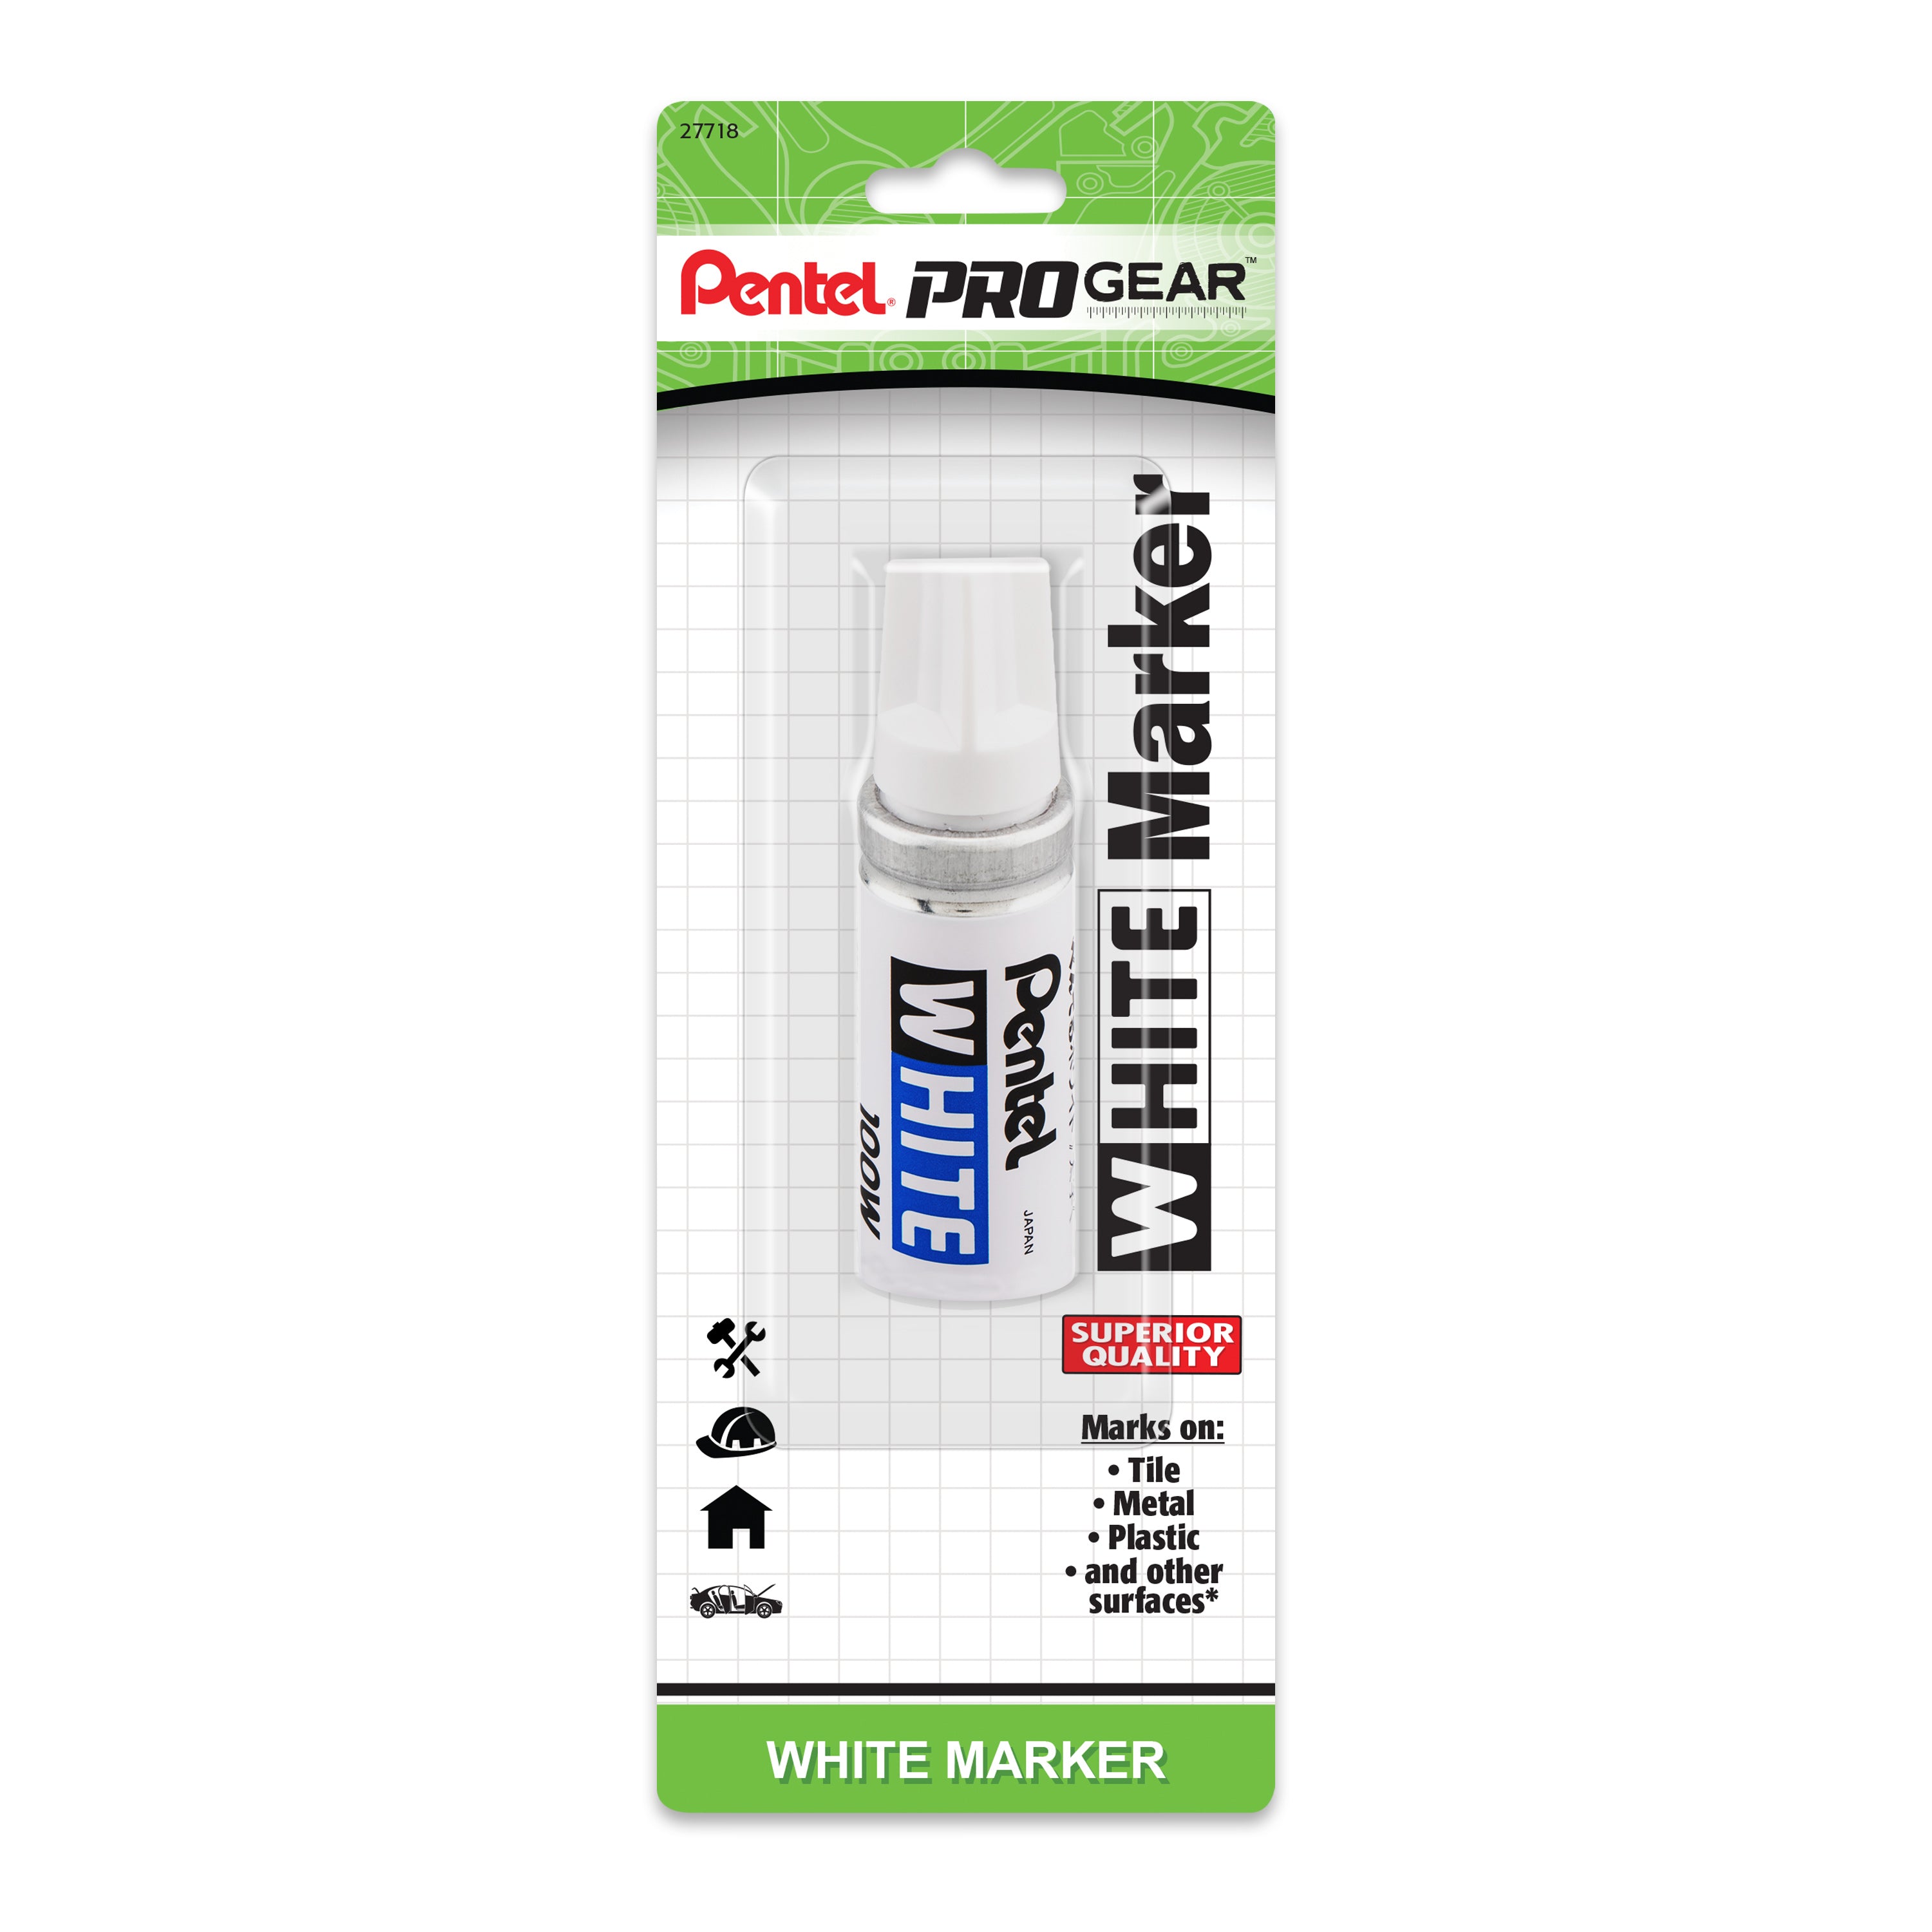 Pentel WHITE Markers 100W-S, Fine Tip